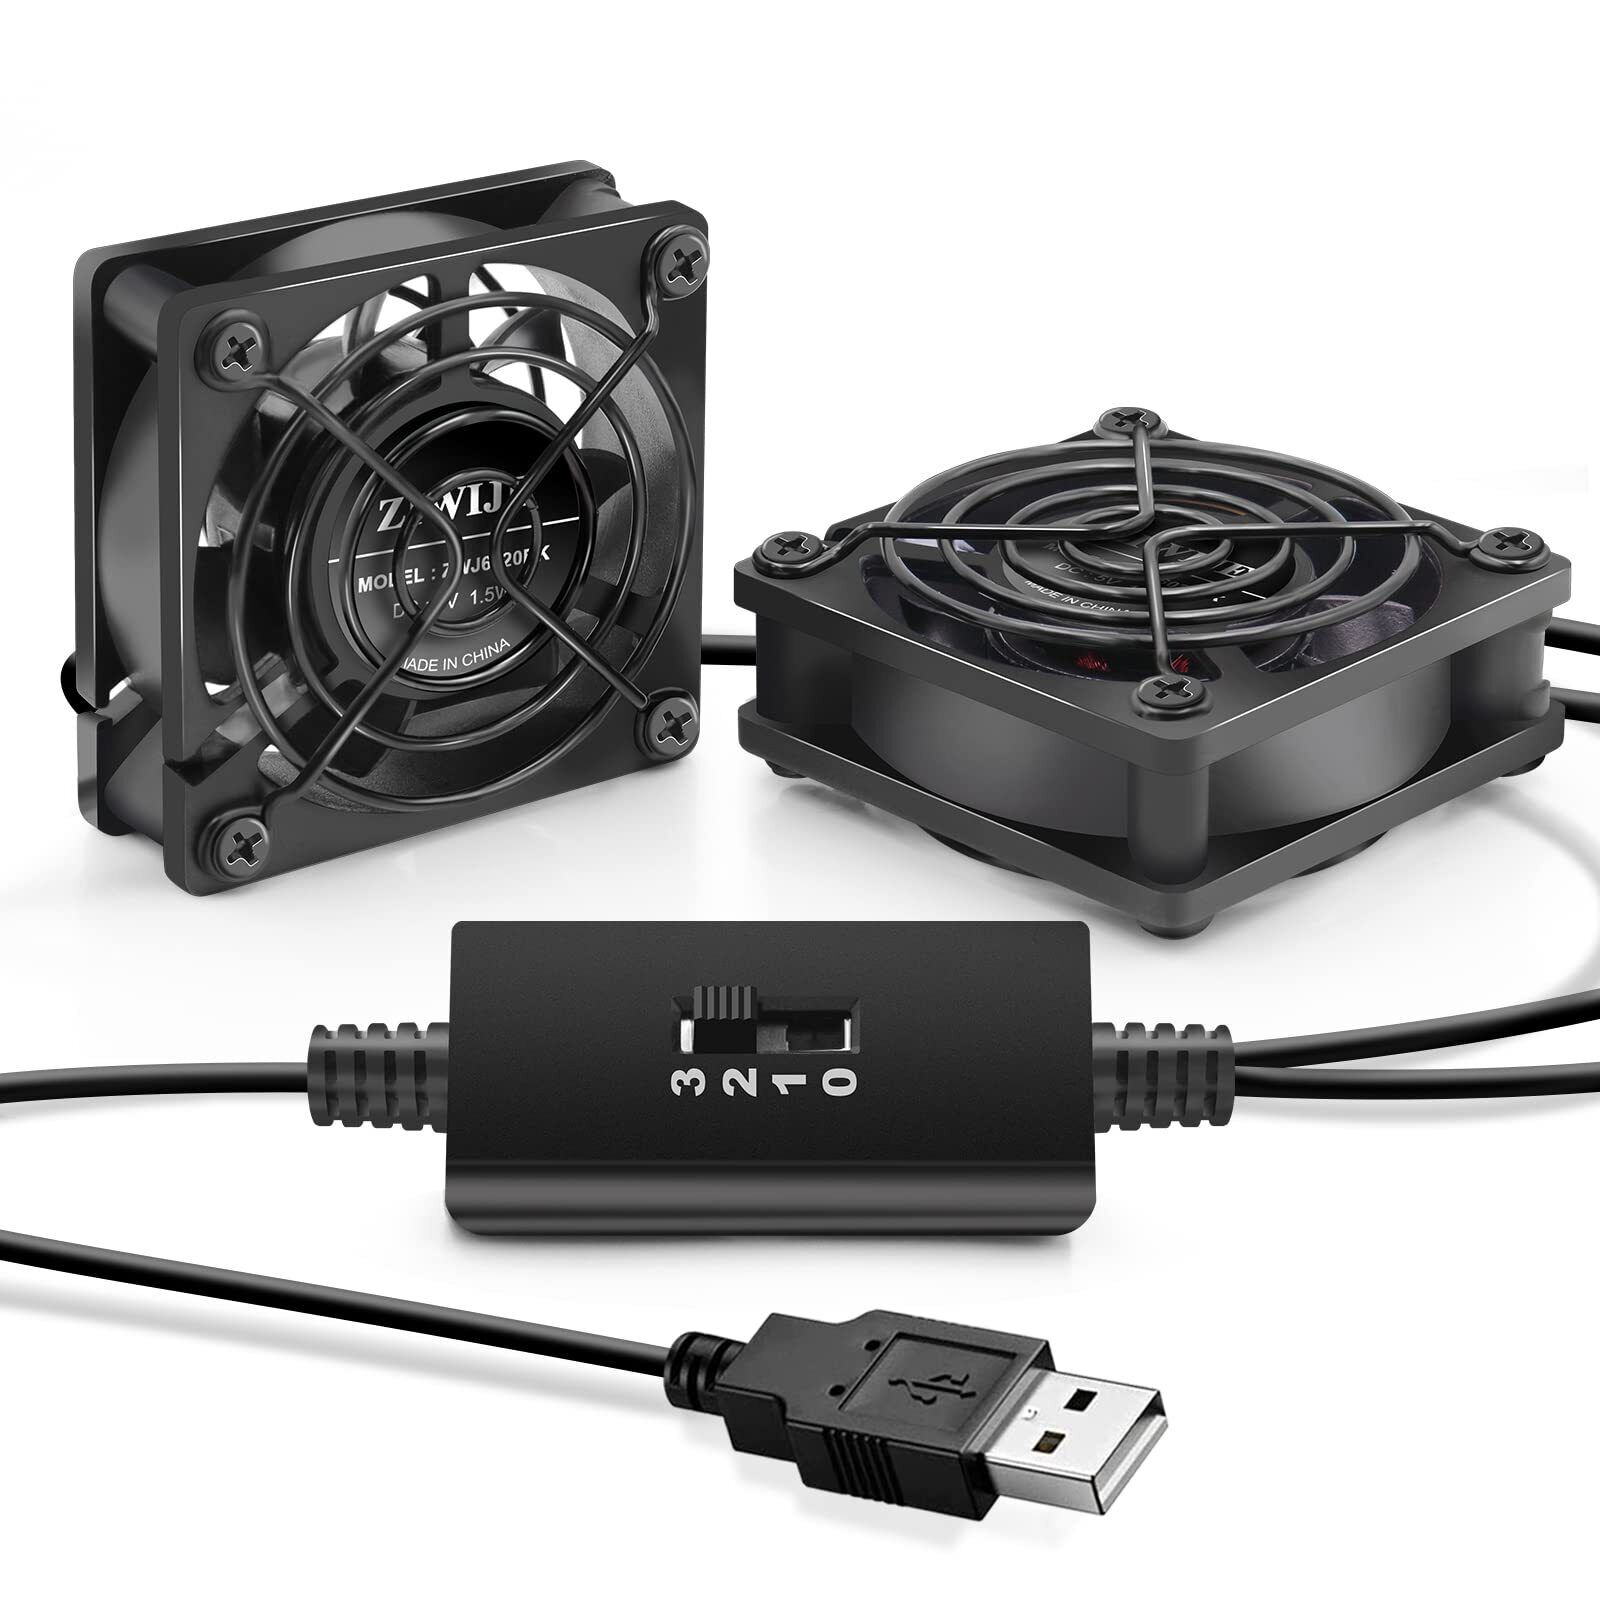 ZIWIJE Dual USB Cooling Fan 60mm with Speeds Control 5V Ball Bearing Mini USB...